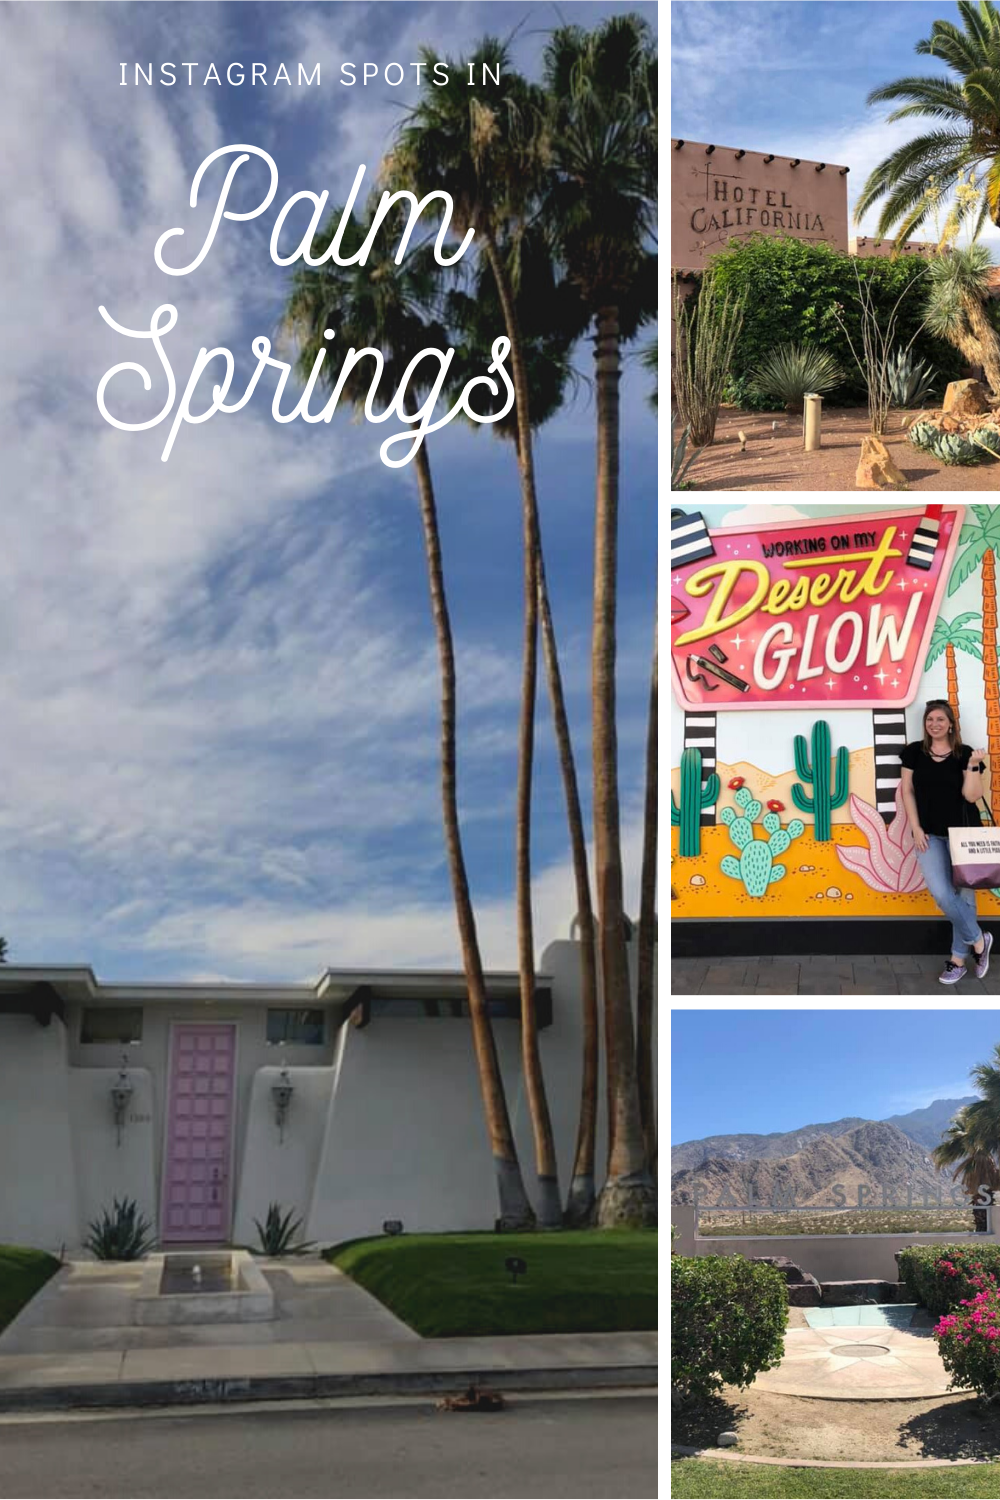 Instagram spots in palm springs - LA Dreaming